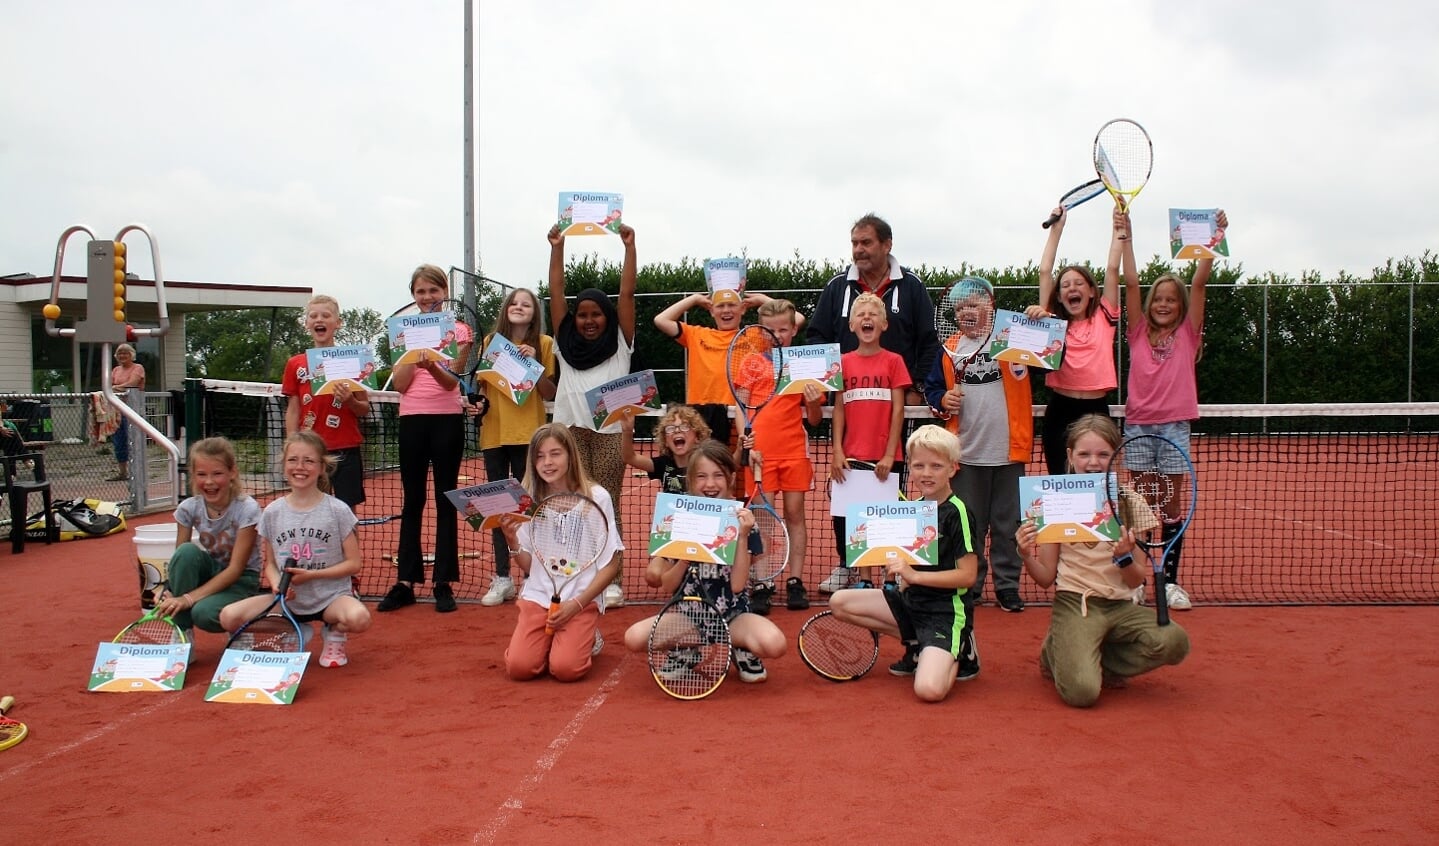 De kinderen tonen trots hun tennisdiploma. Foto: Billy Kelmendi.